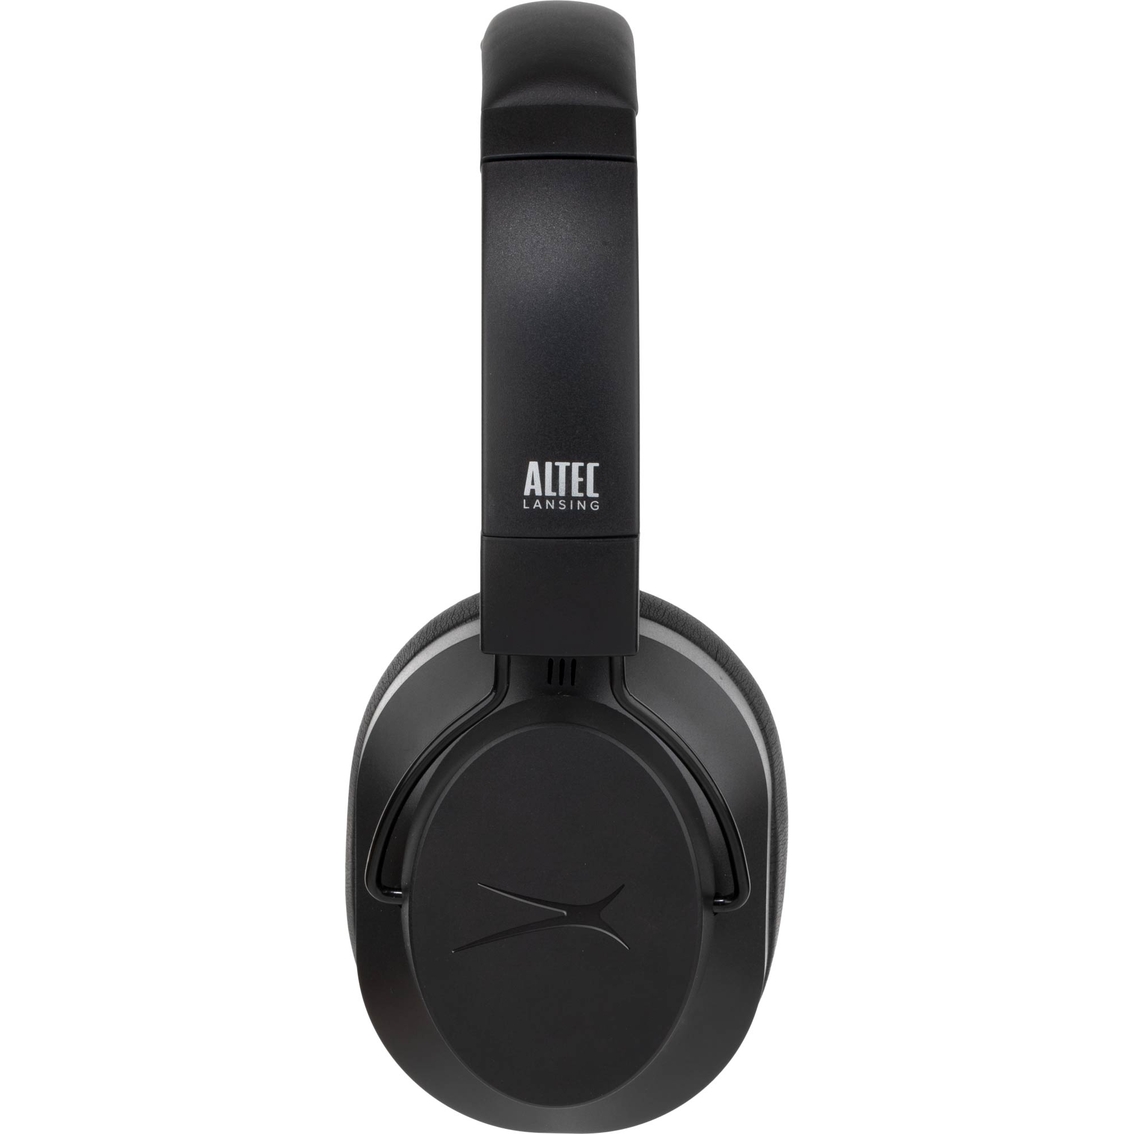 Altec Lansing Whisper Active Noise Canceling Bluetooth Headphones - Image 2 of 3